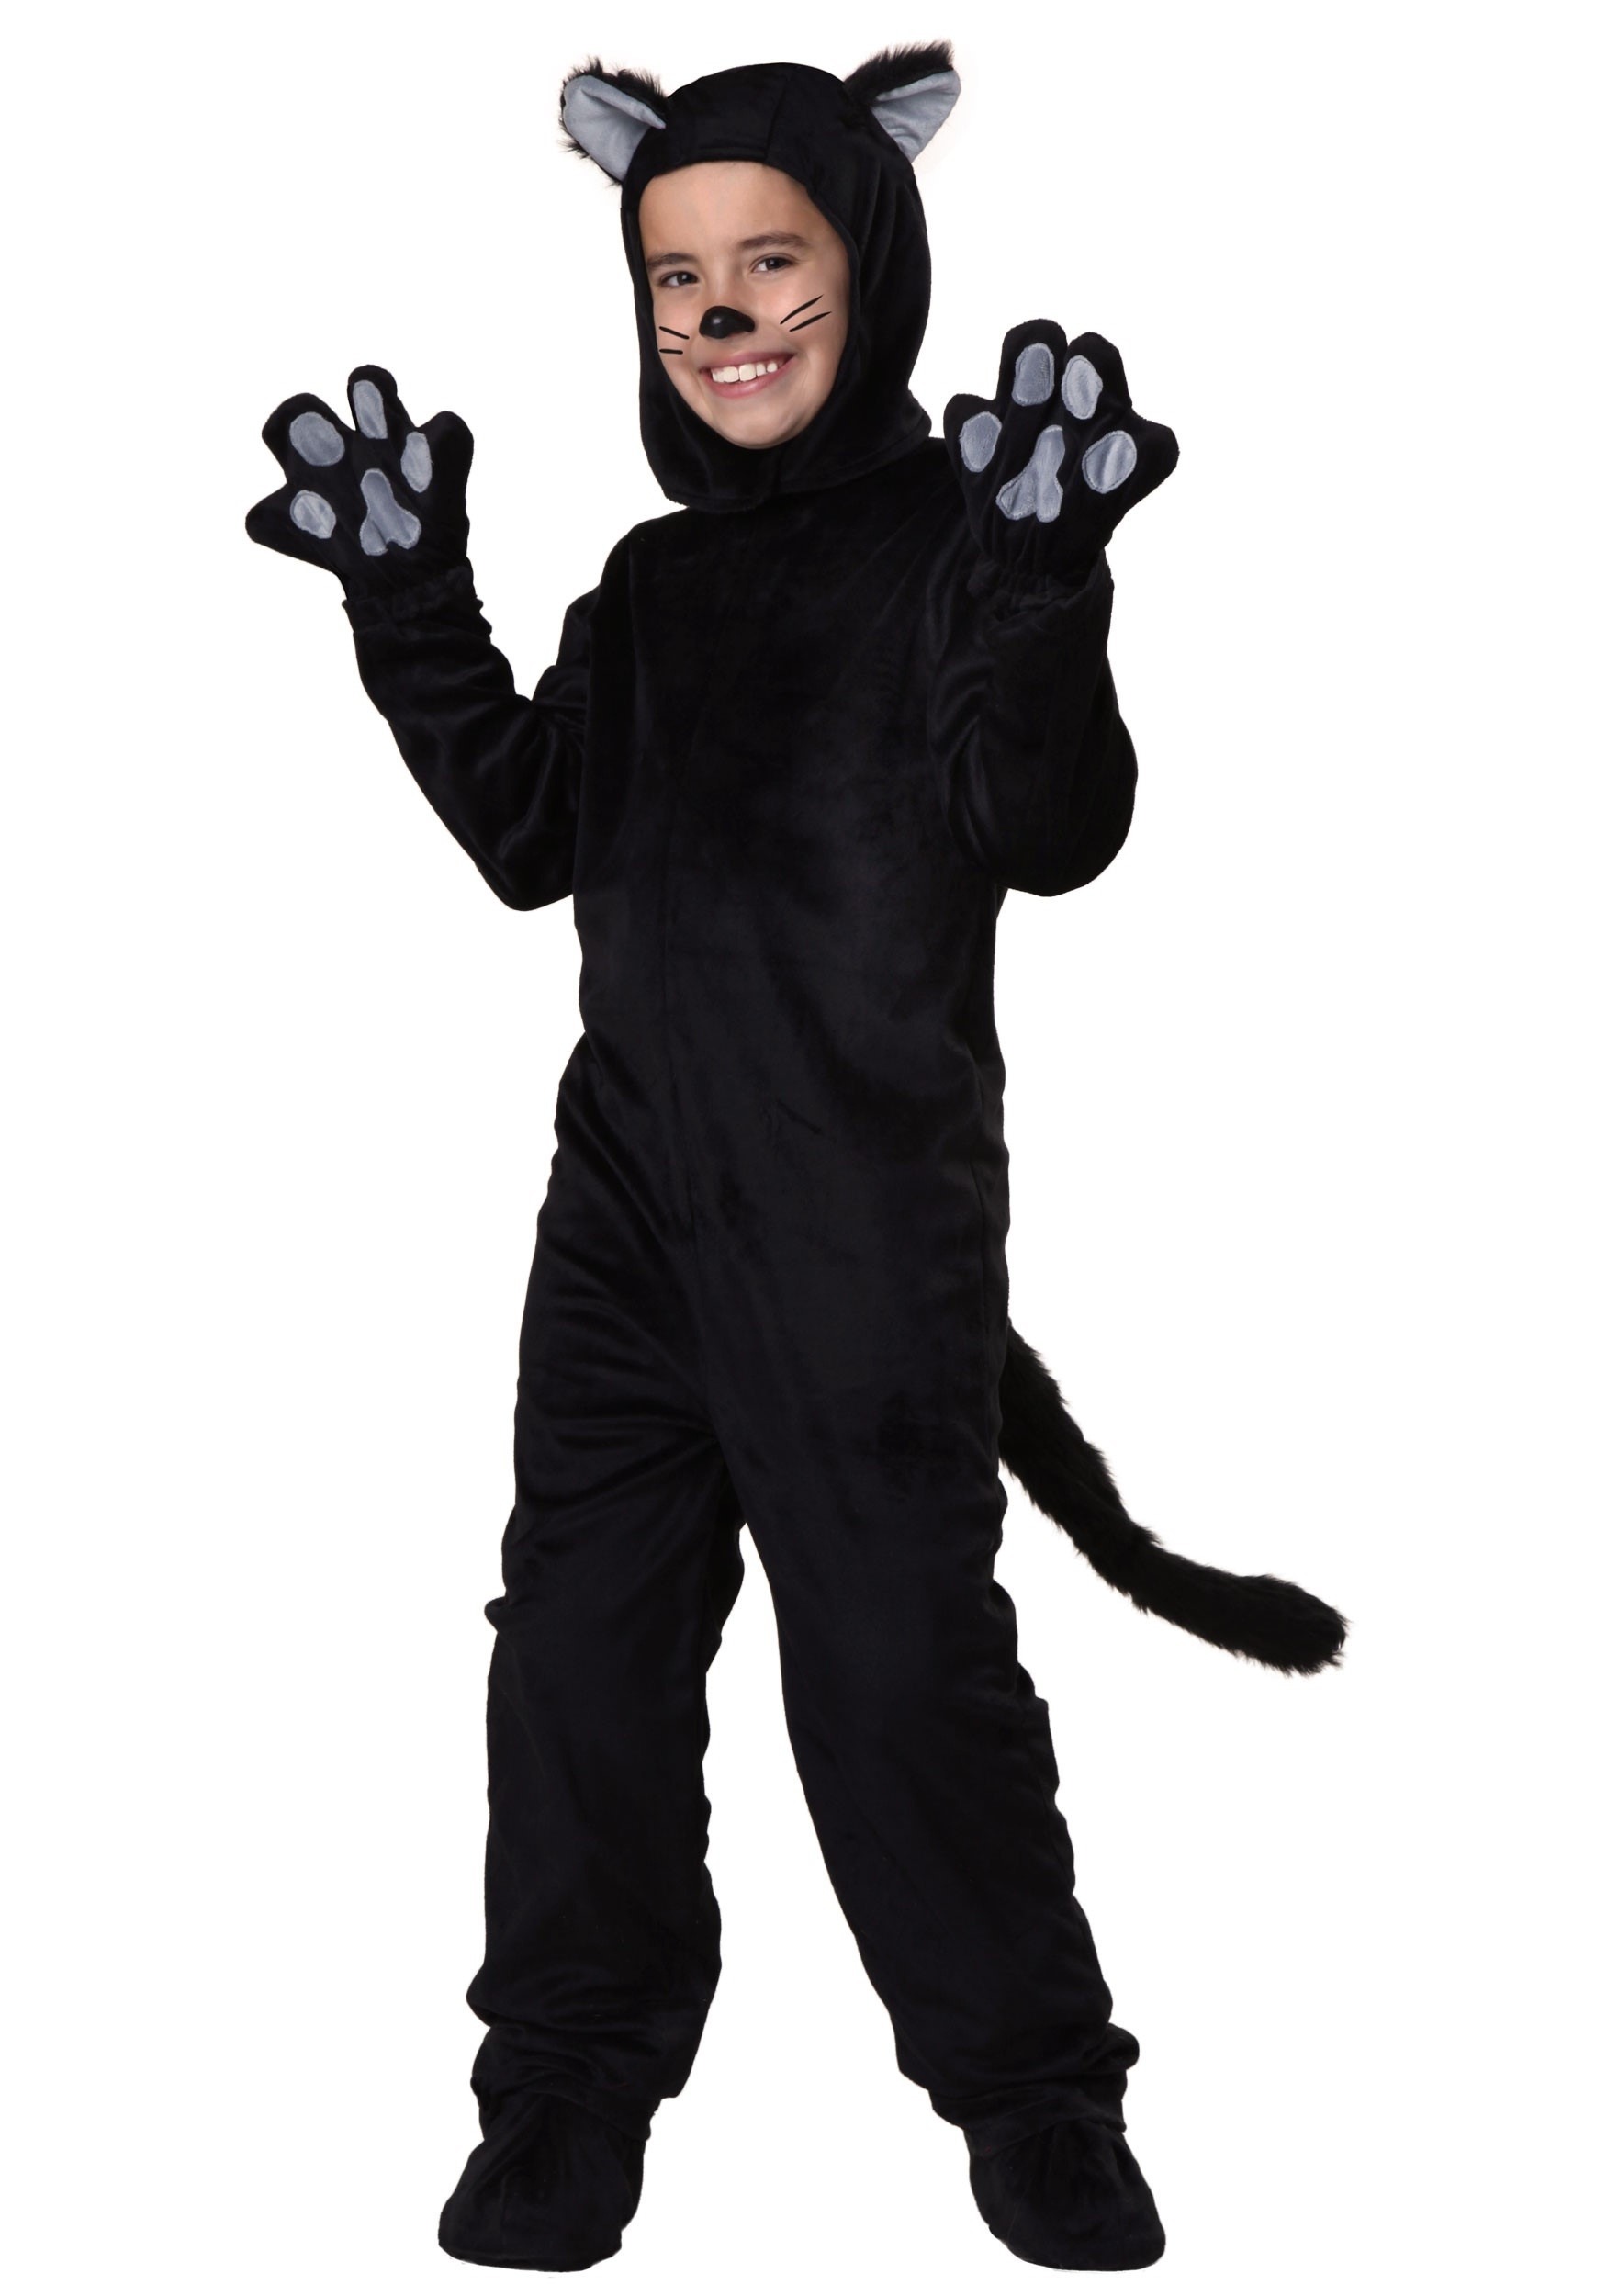 Photos - Fancy Dress Black Cat FUN Costumes  Costume for Kids | Warm Halloween Costume Black FUN 